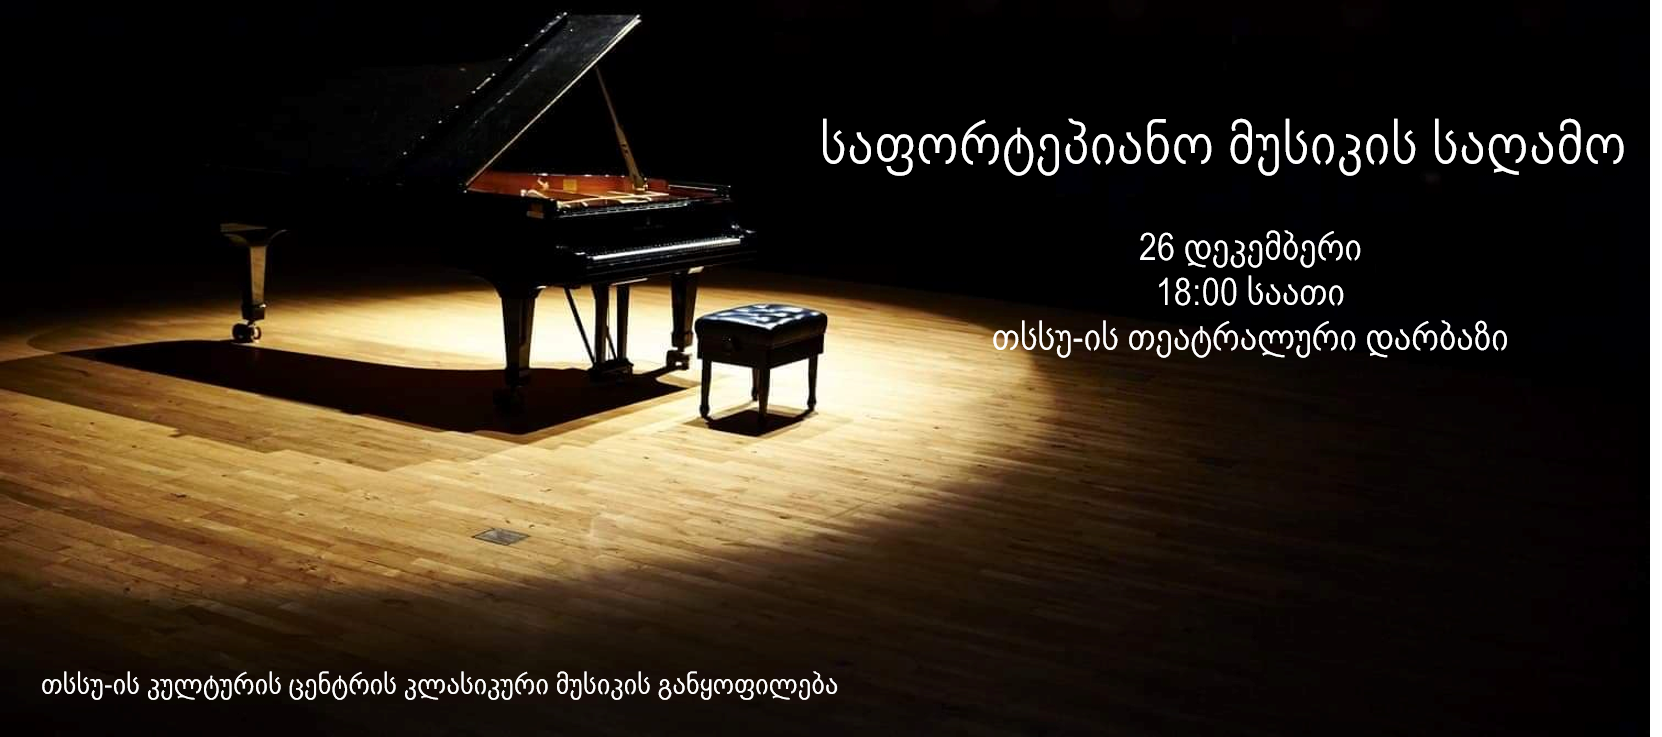 Piano Music Event image